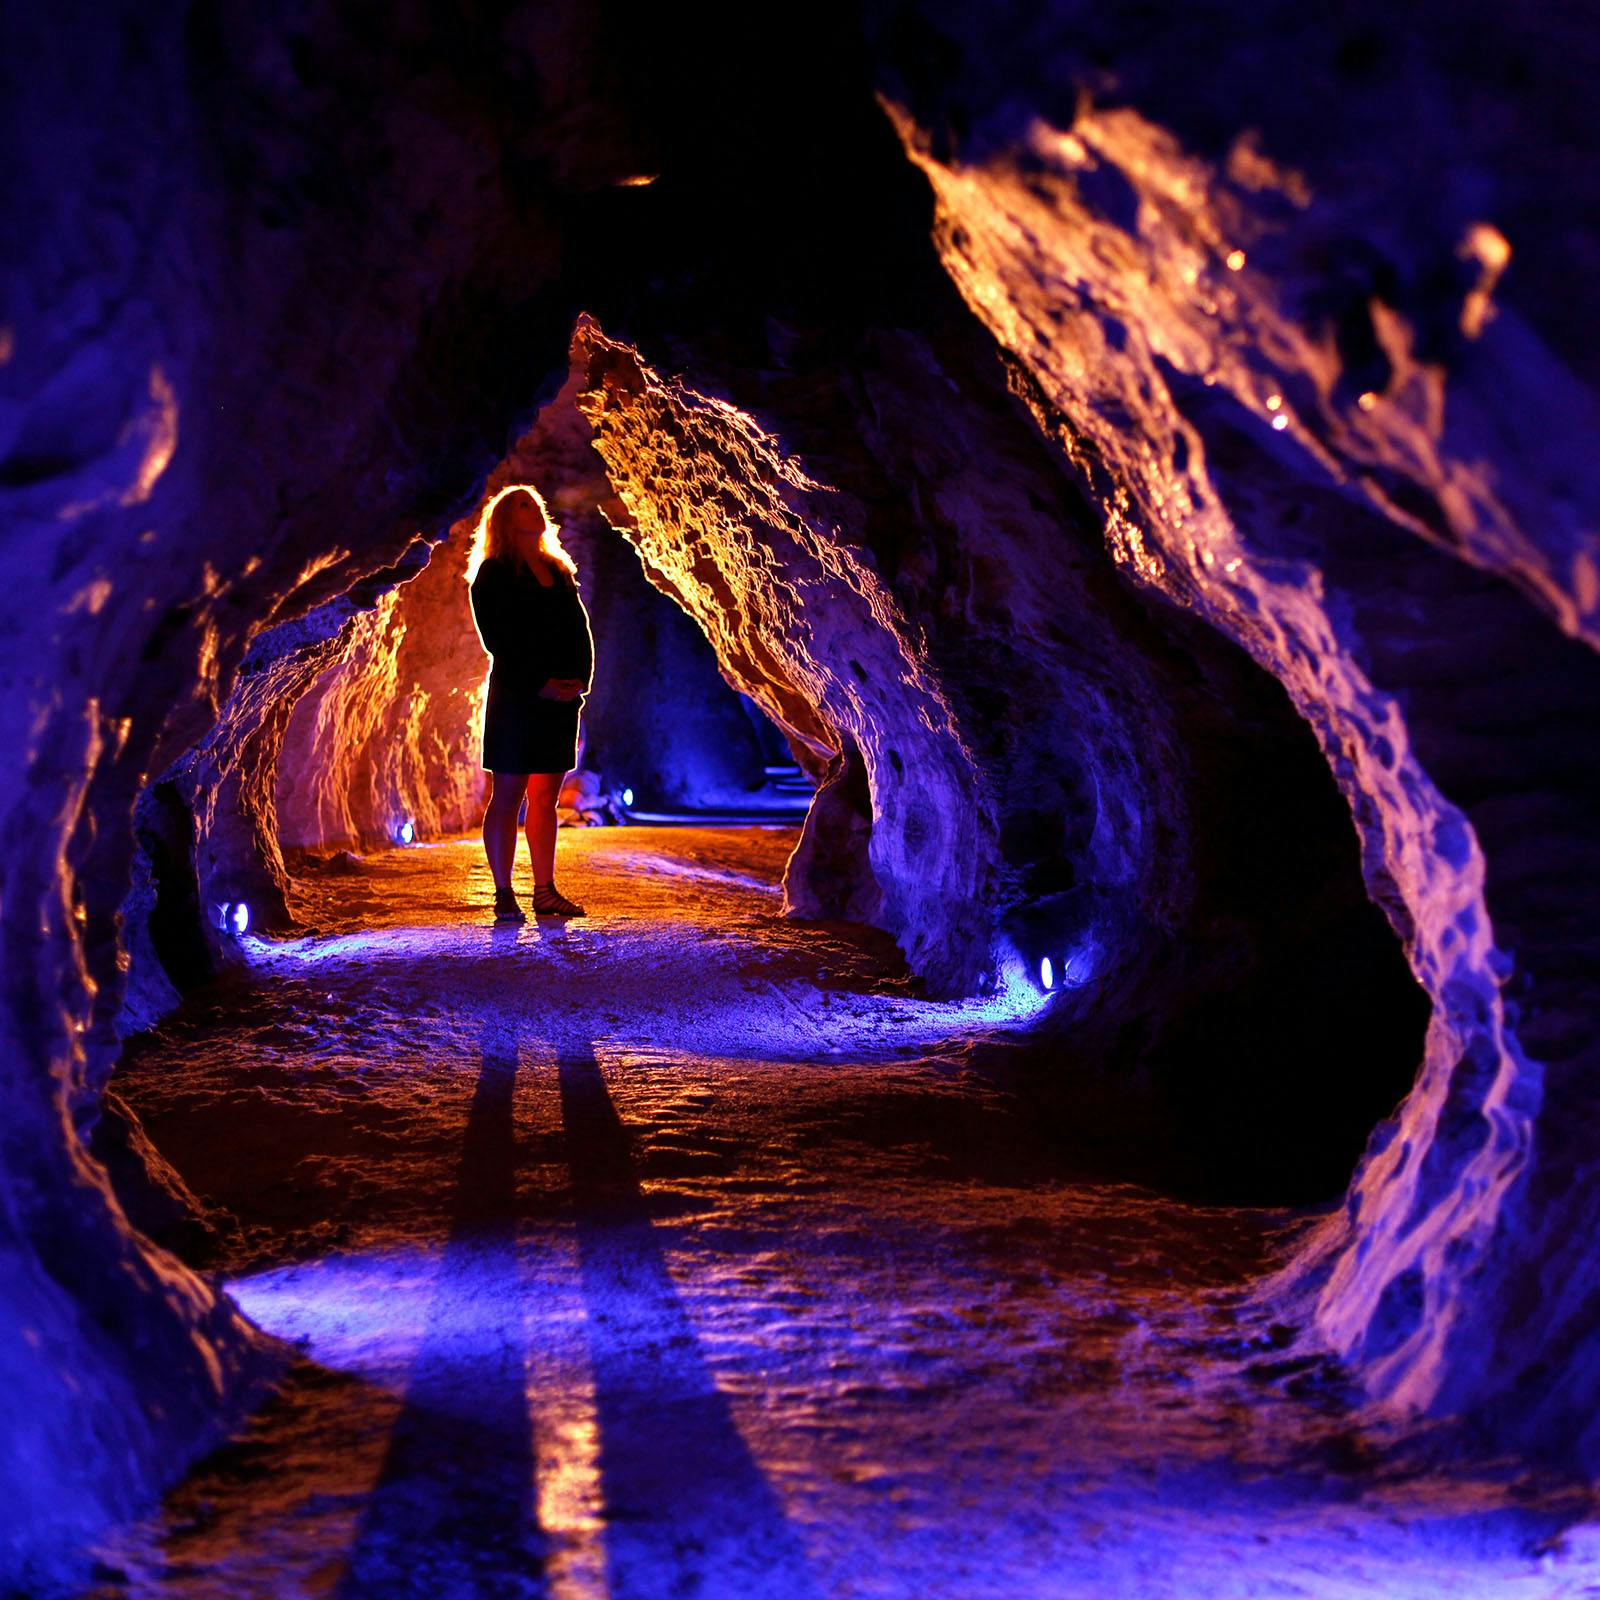 Ruakuri cave tunnel